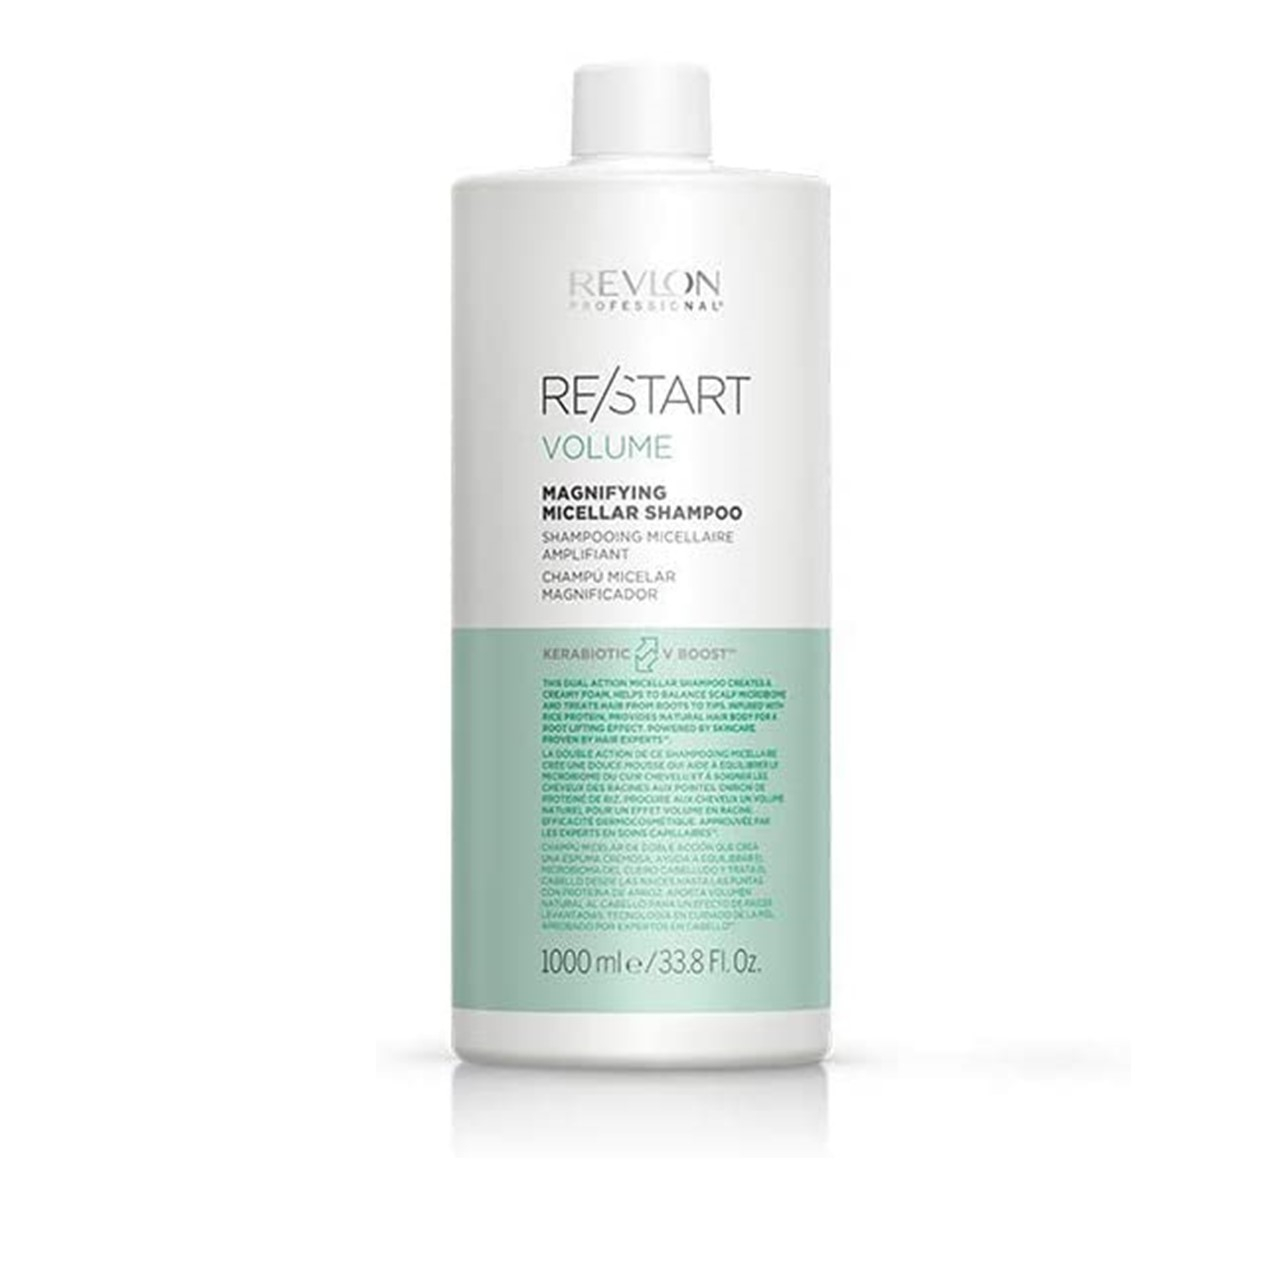 Buy Revlon Professional Re/Start Volume Magnifying USA · 1L Shampoo Micellar (33.81fl oz)